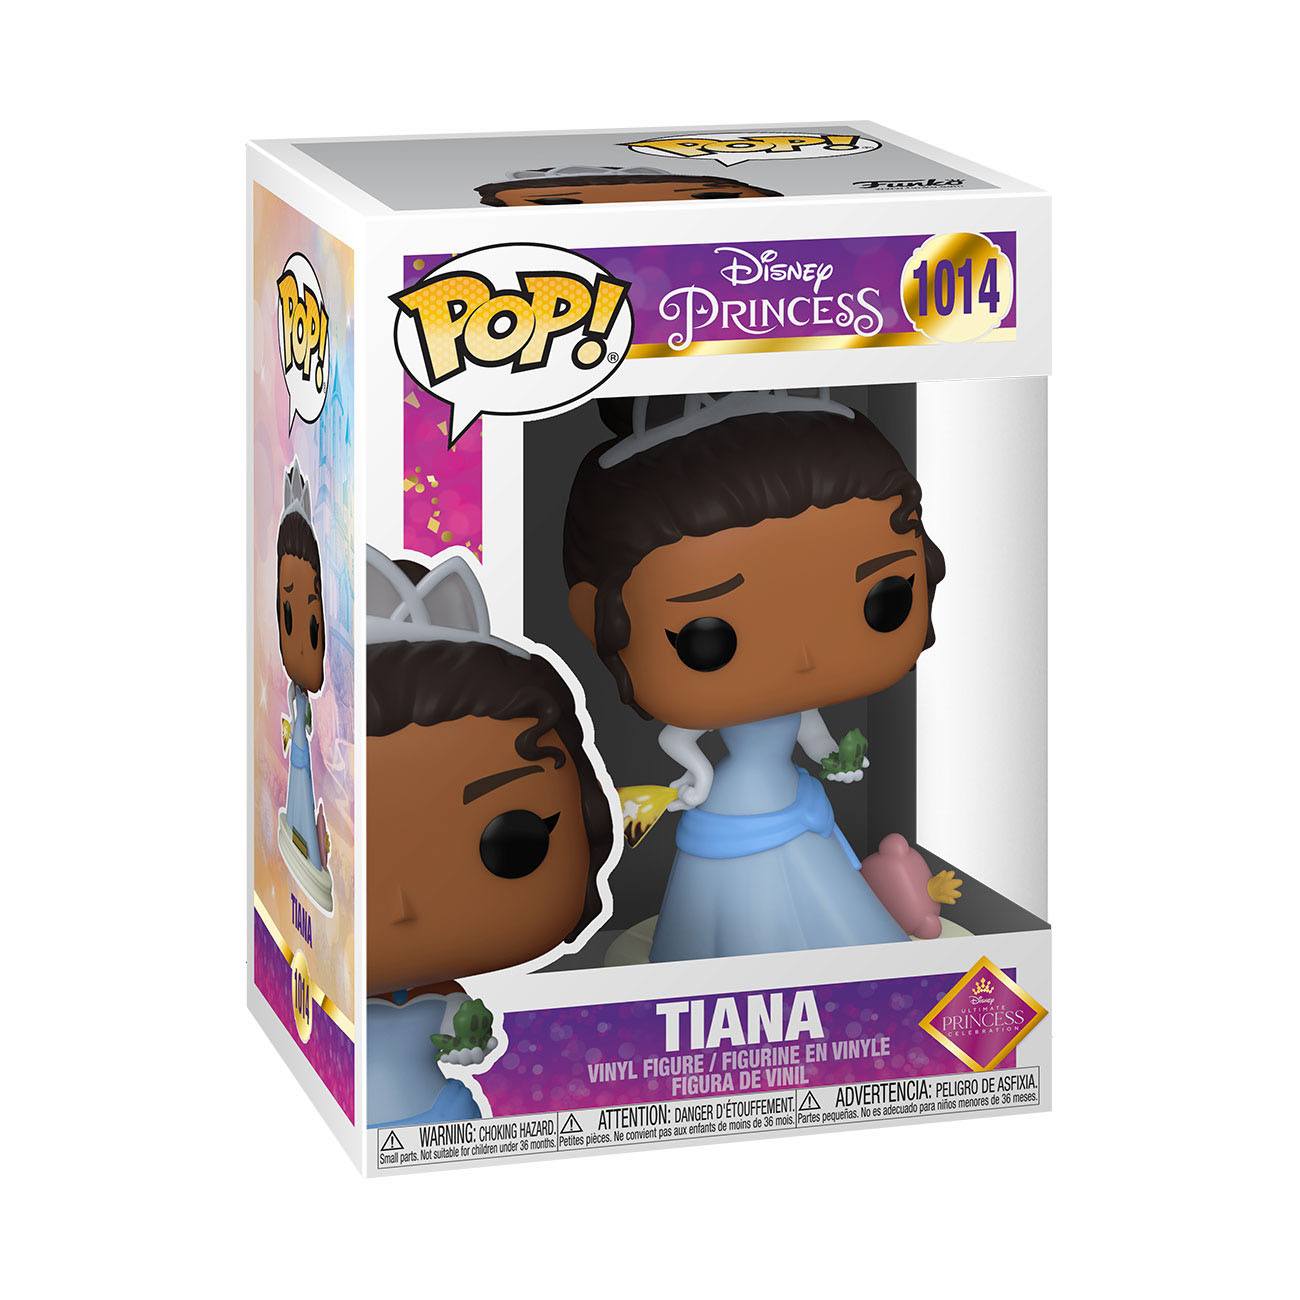 Disney Ultimate Princess - Tiana 1014